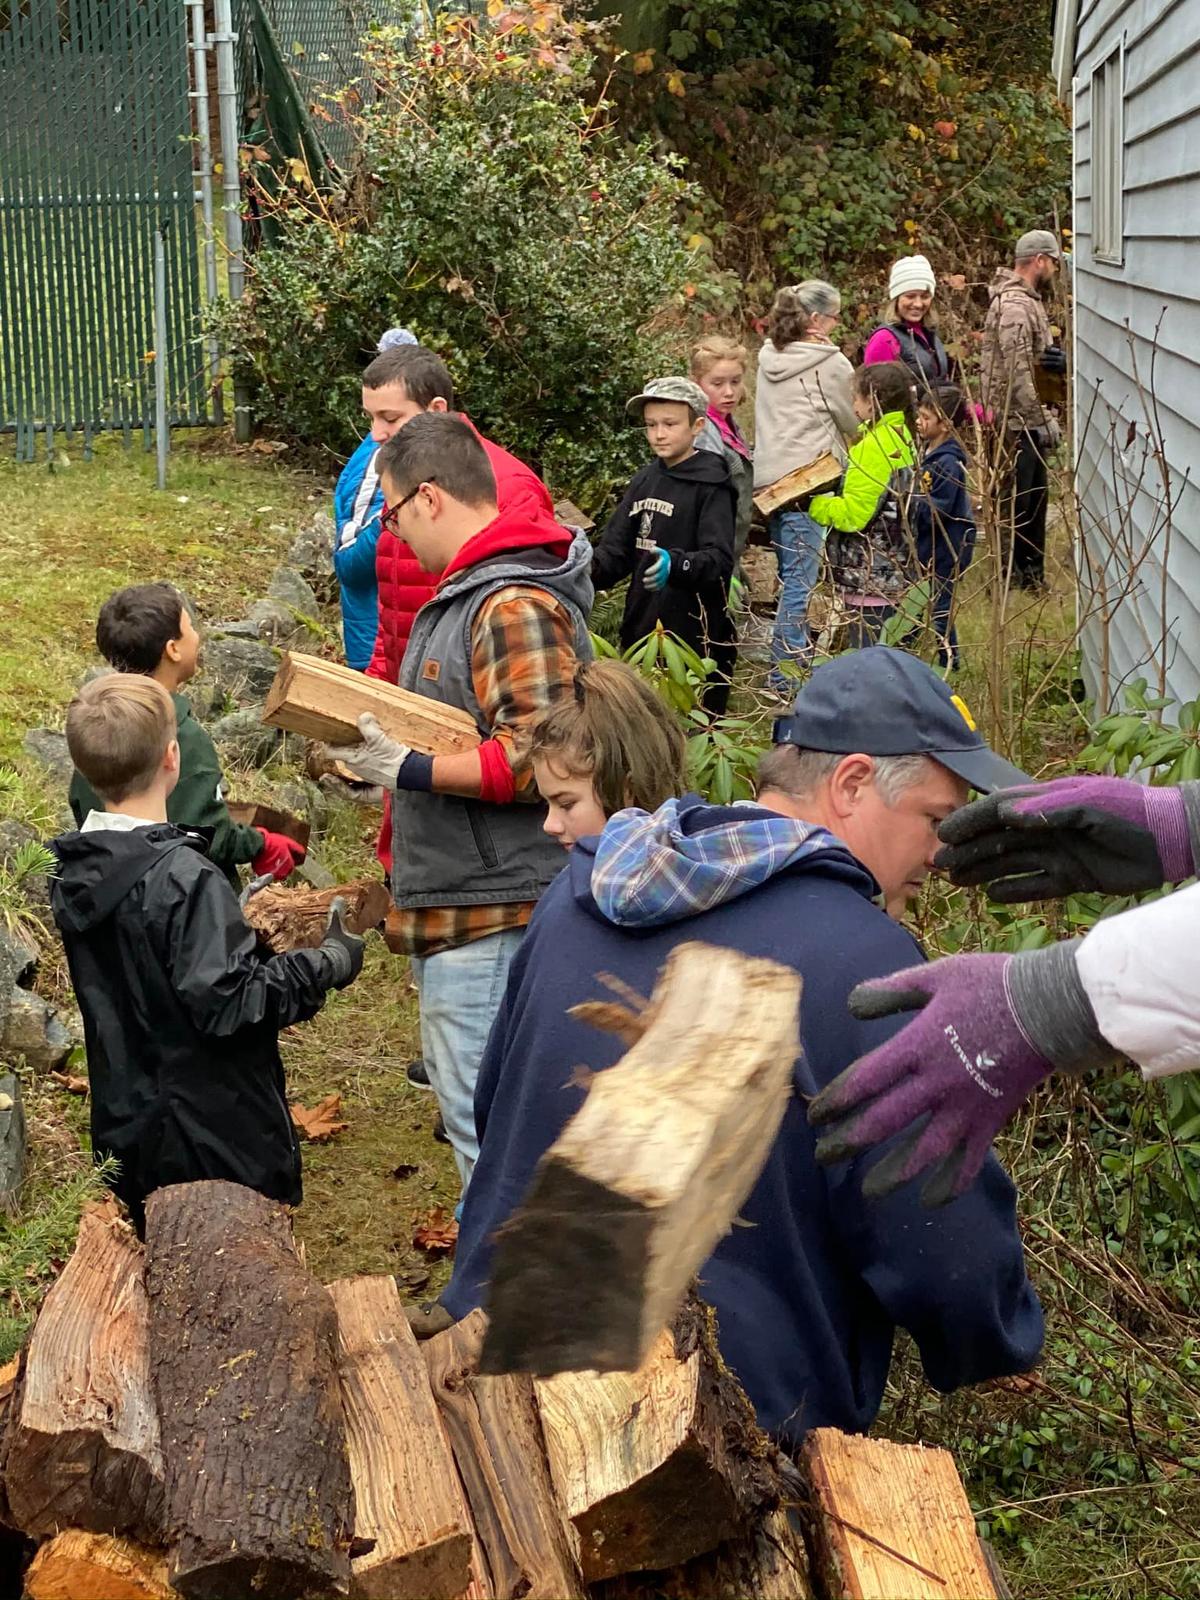 Volunteers help stack the firewood. (Courtesy of Shane McDaniel)